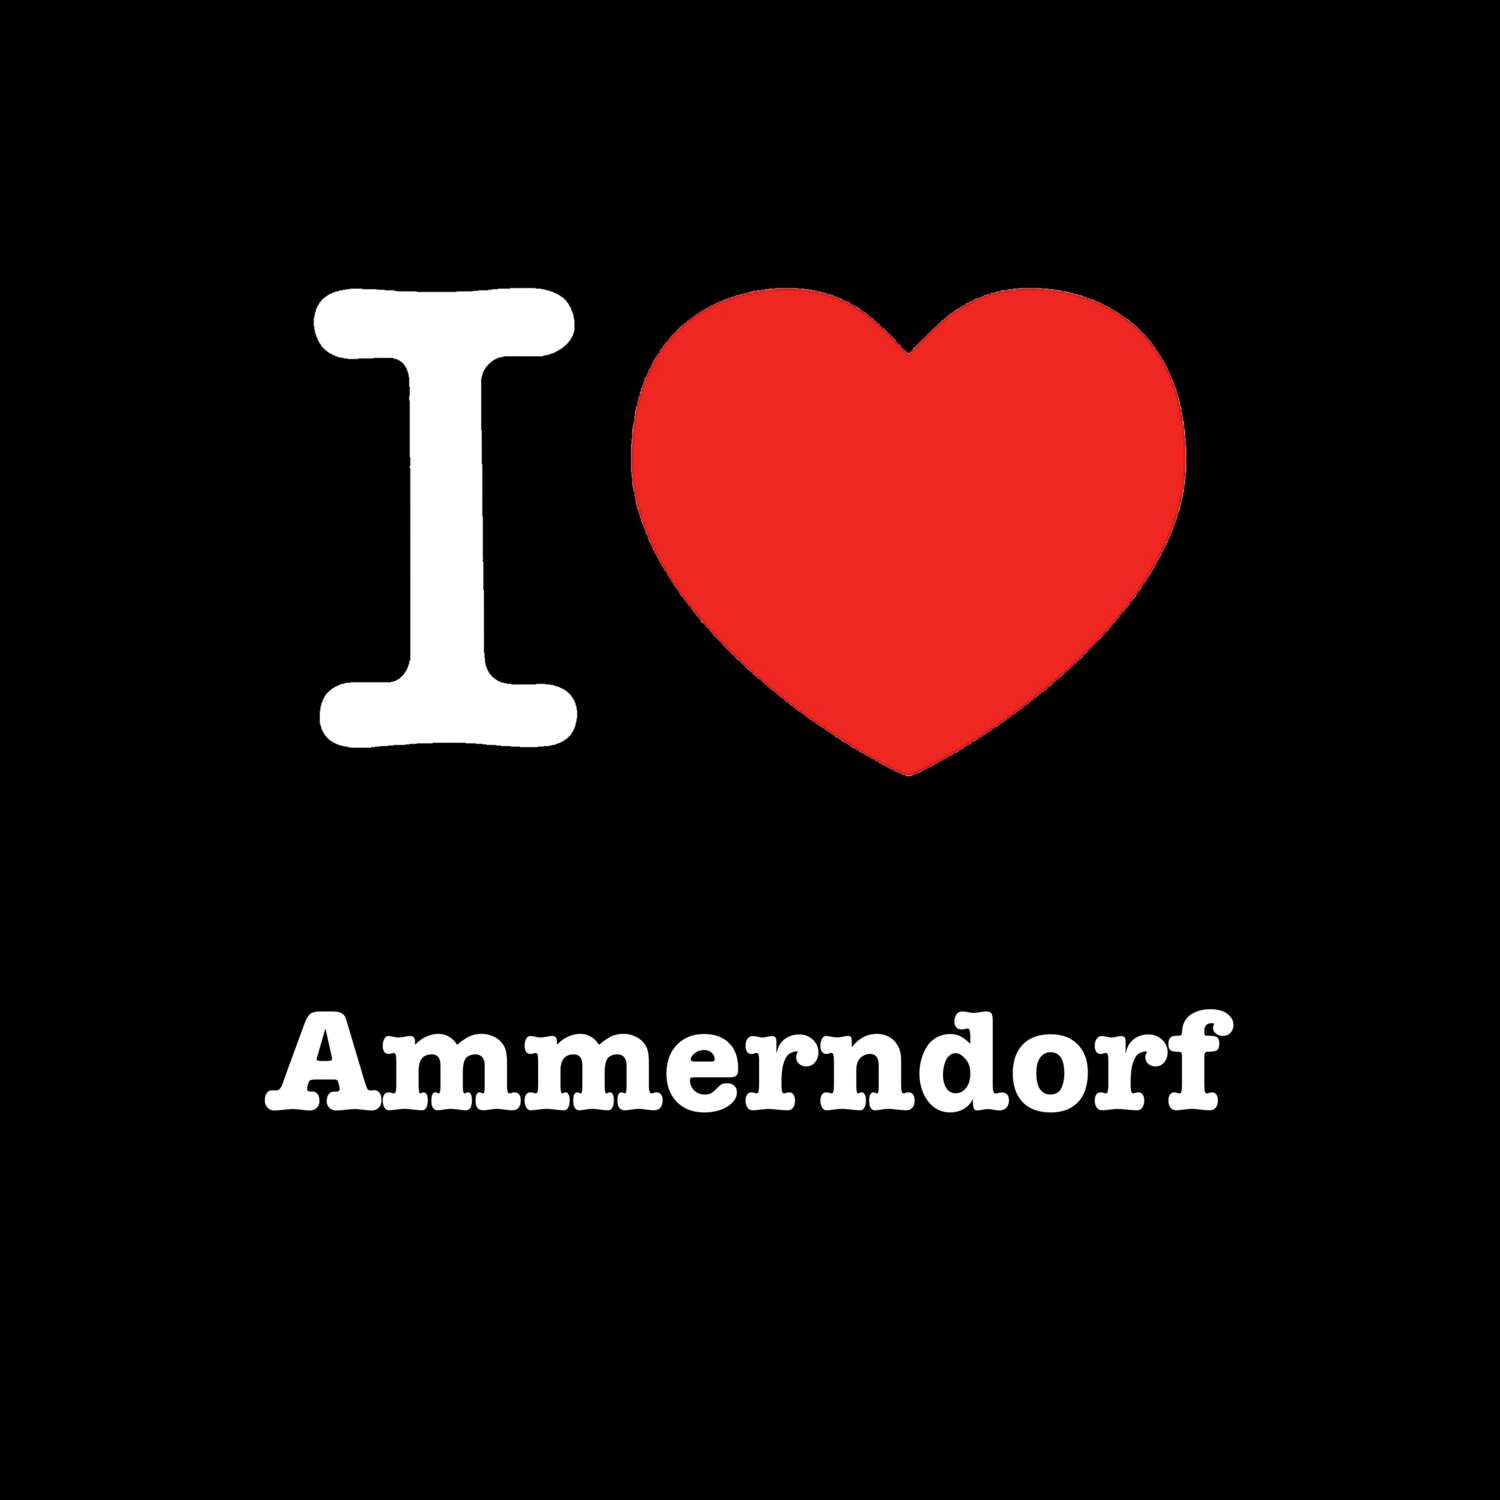 Ammerndorf T-Shirt »I love«